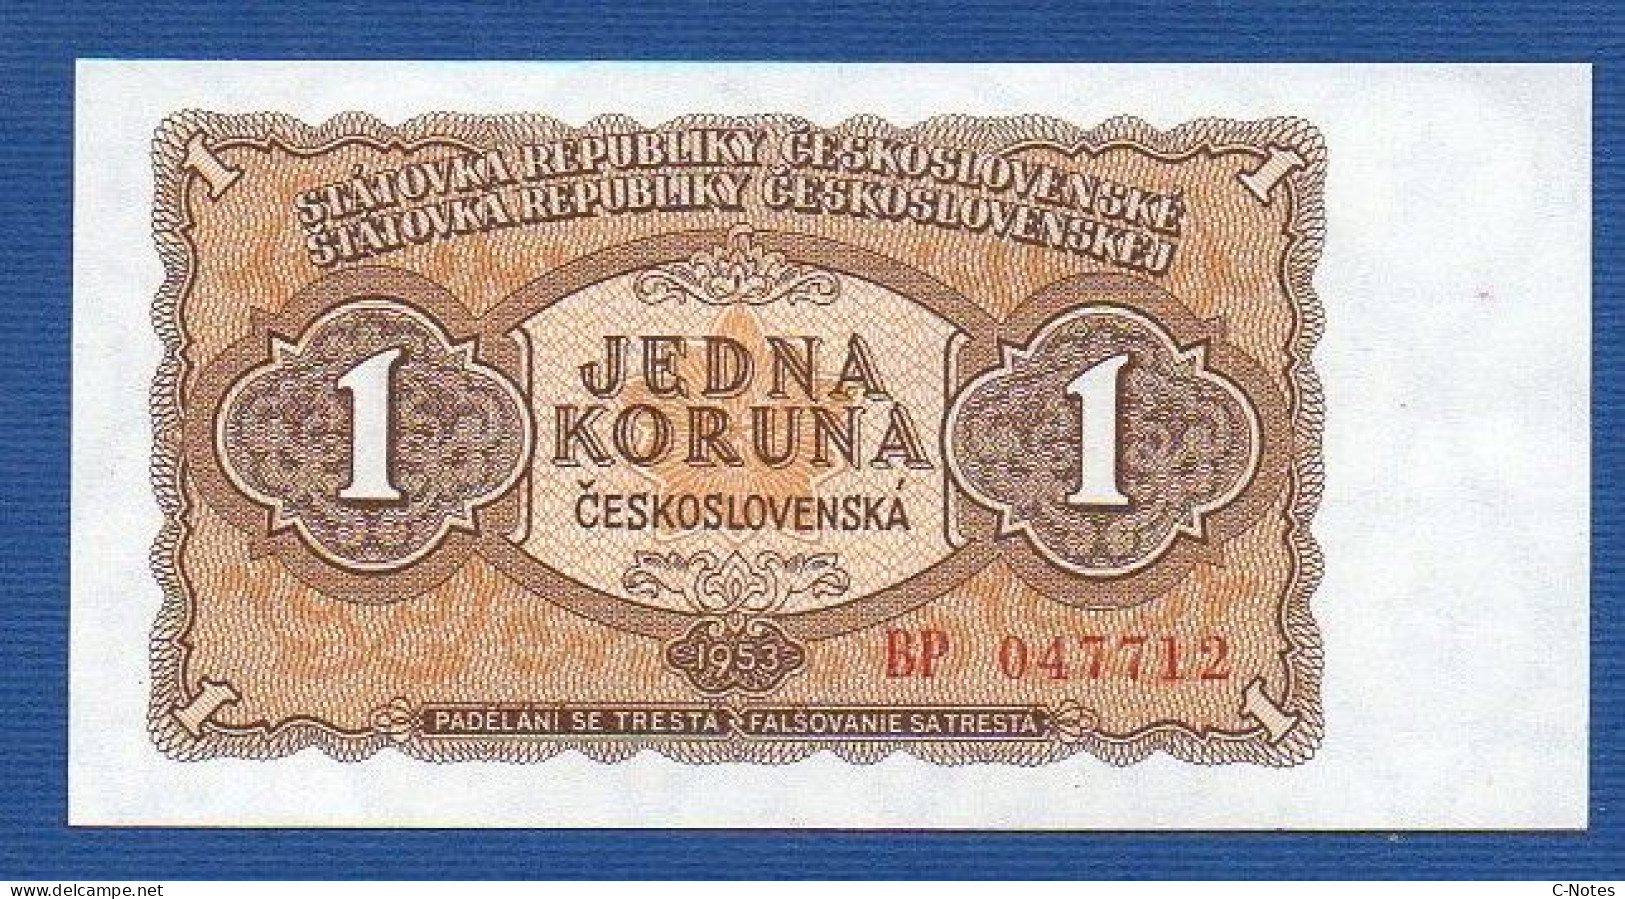 CZECHOSLOVAKIA - P.78a – 1 Koruna Československá (1953) UNC, S/n BP047712 - Tchécoslovaquie